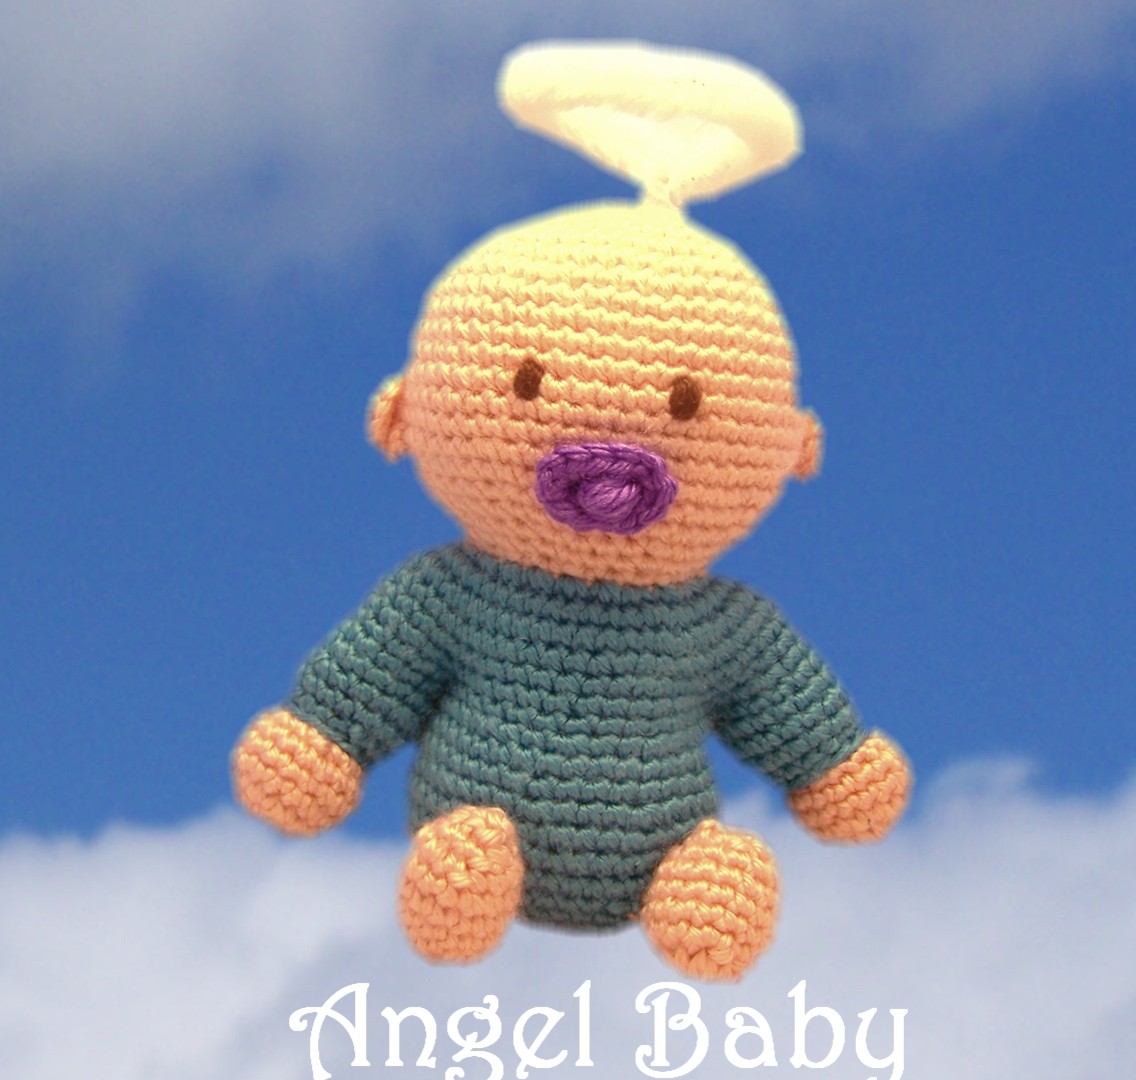 Bernat: Pattern Detail - Baby Coordinates - Star Baby Bib (crochet)